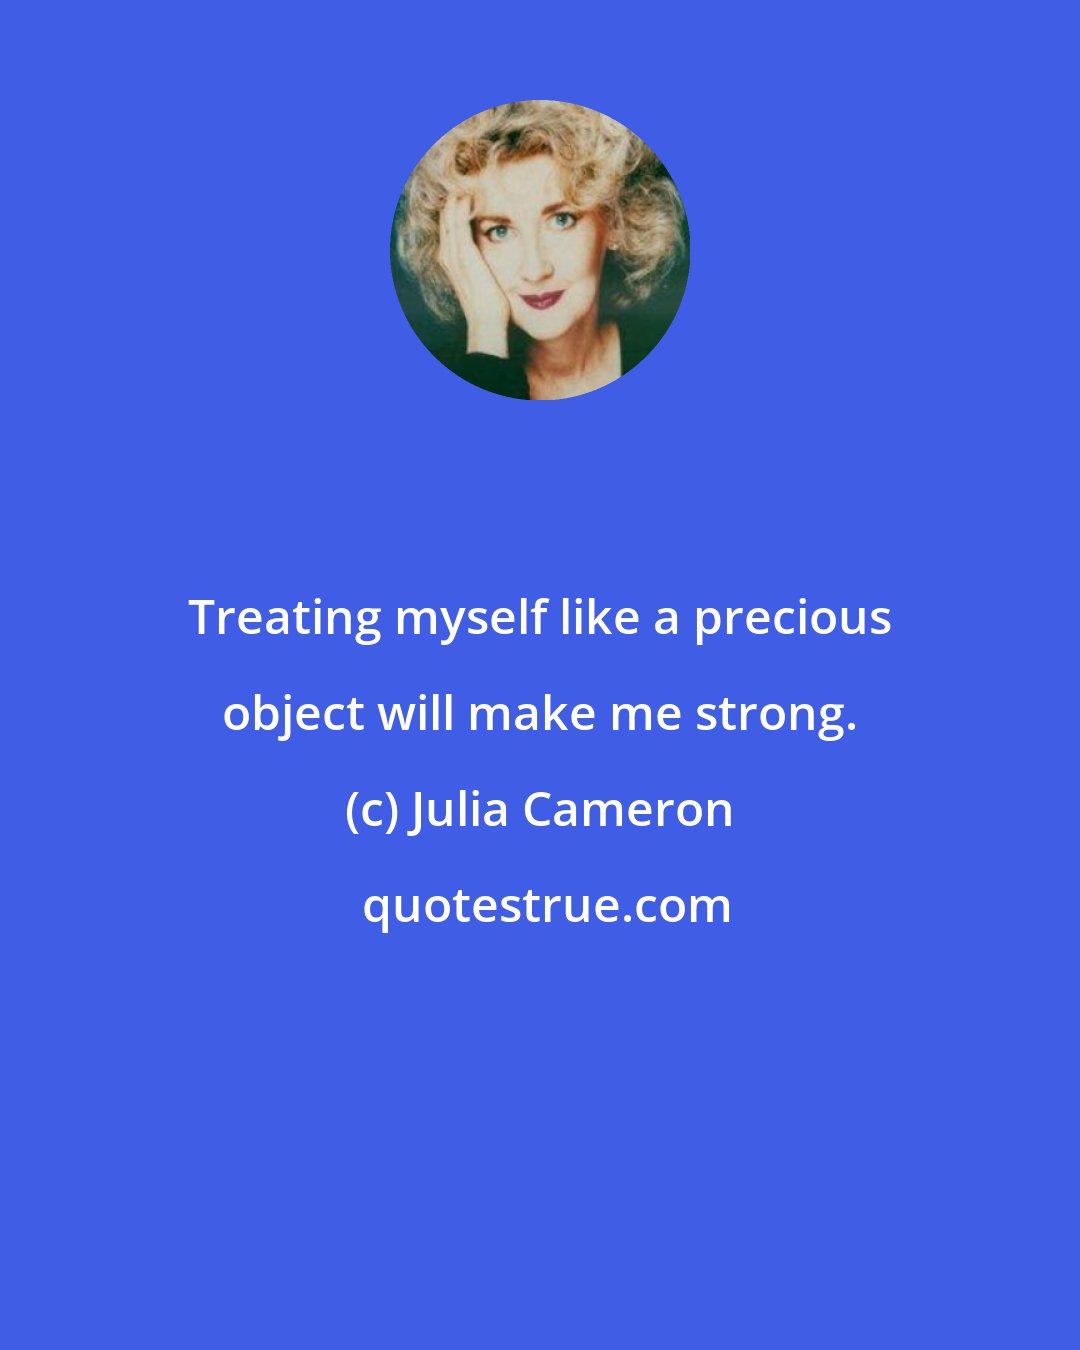 Julia Cameron: Treating myself like a precious object will make me strong.